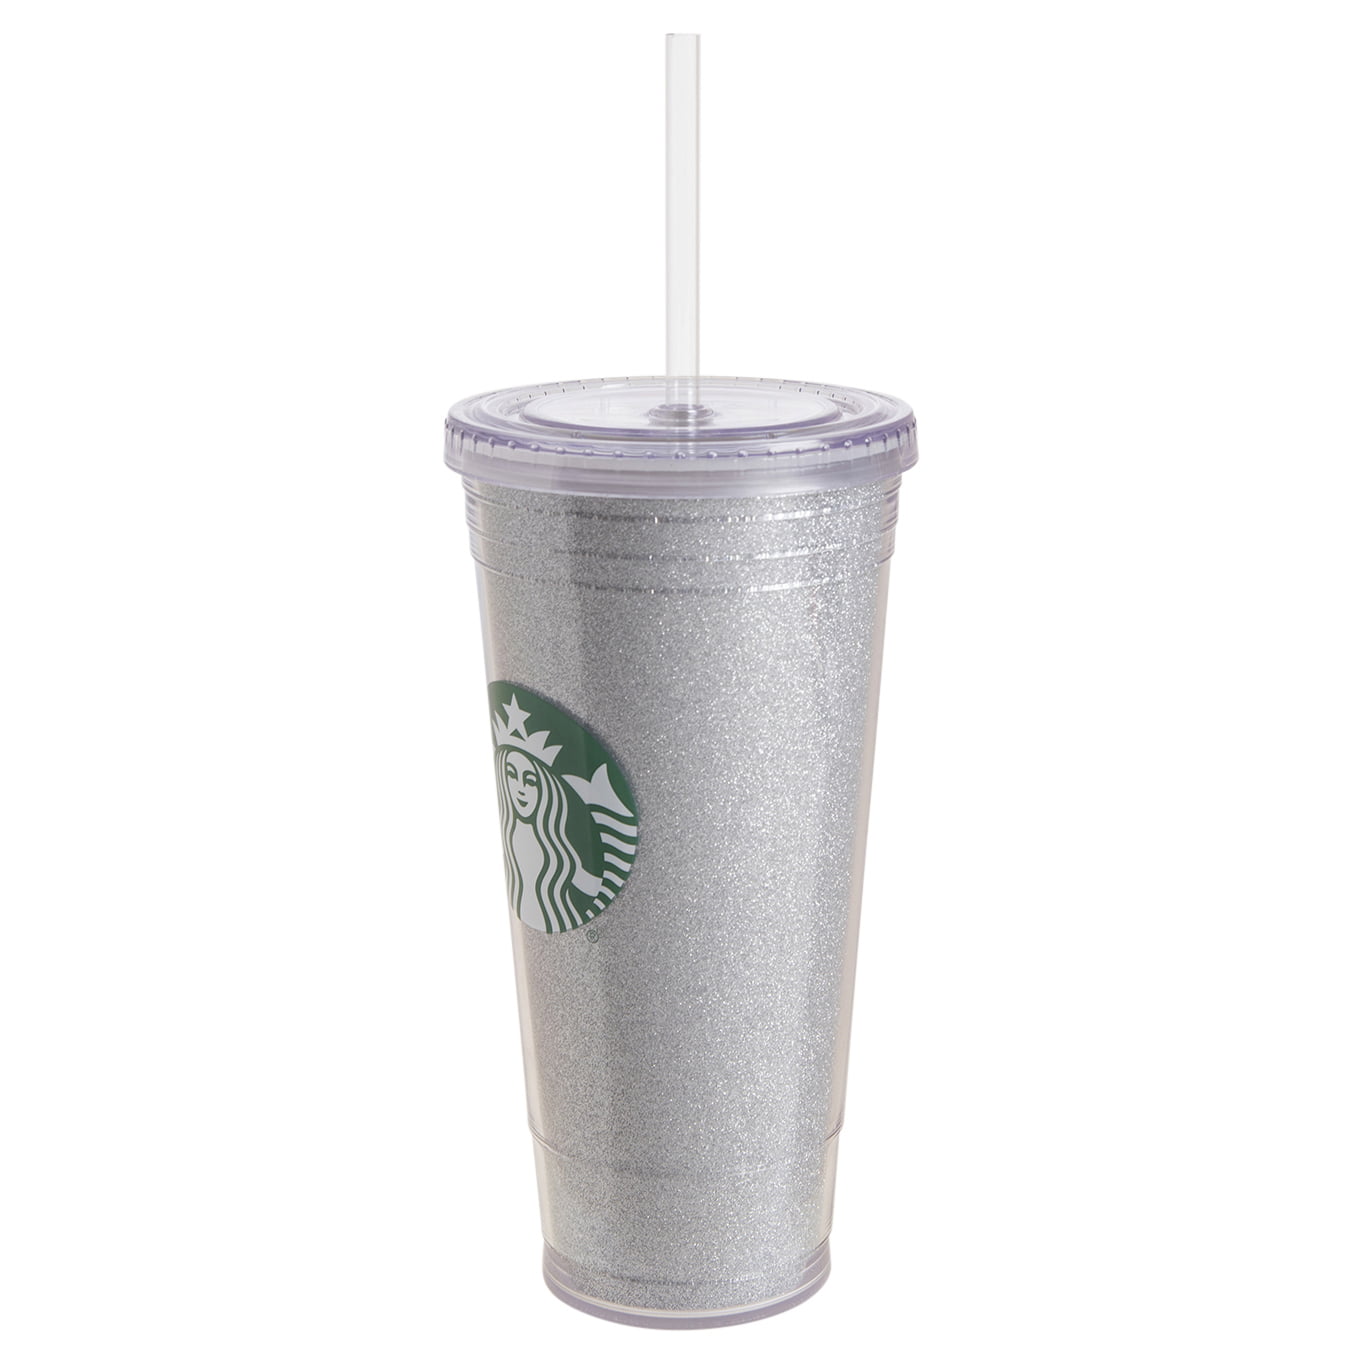 Starbucks Mug Tumbler Cup Stainless Steel 500 ml /17 fl oz Silver